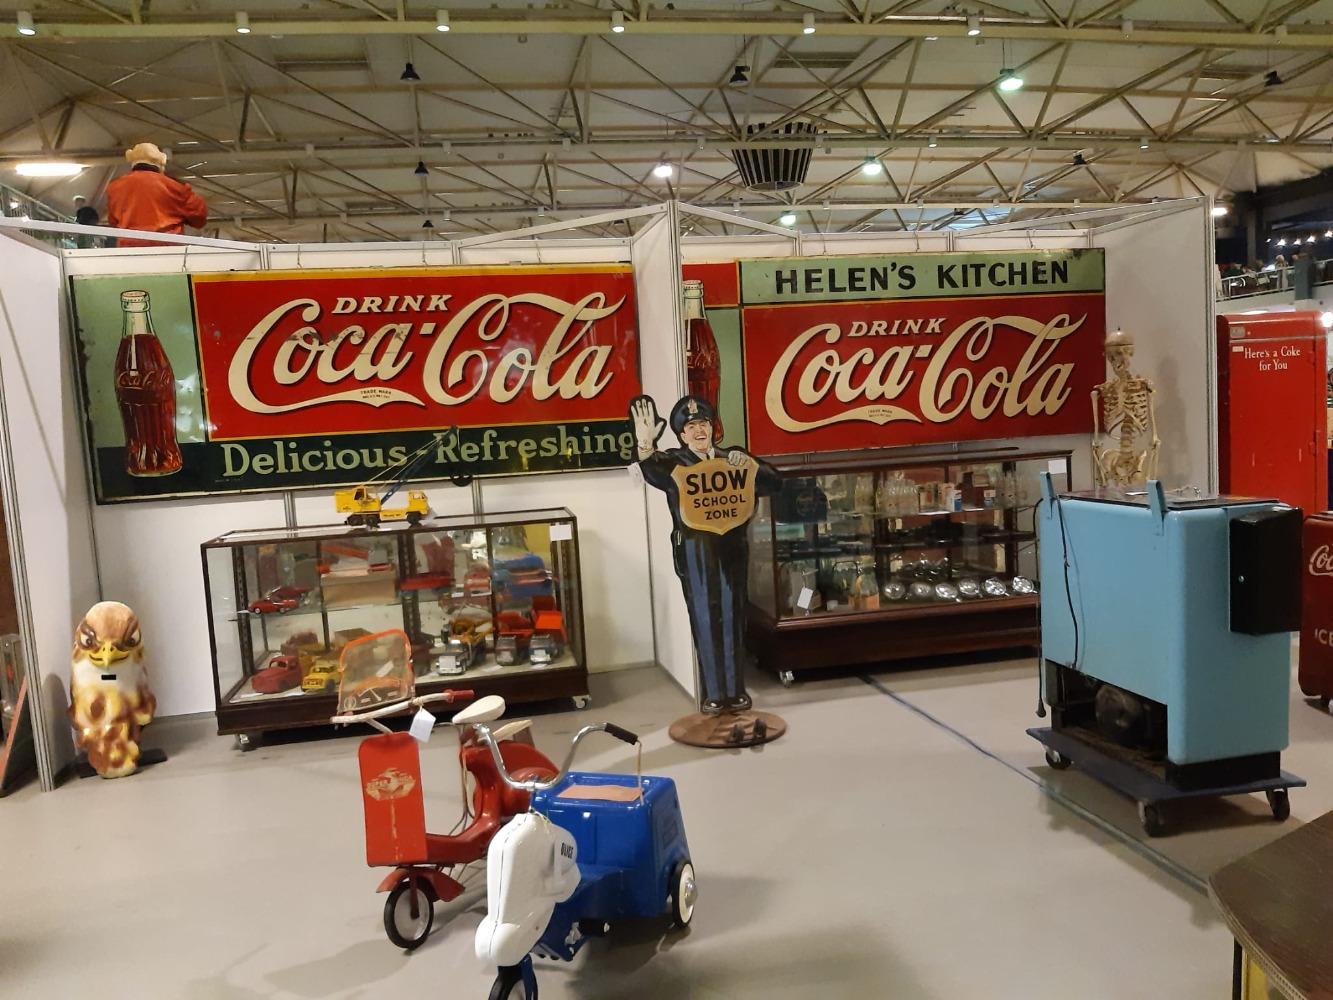 Coca-Cola billboard 